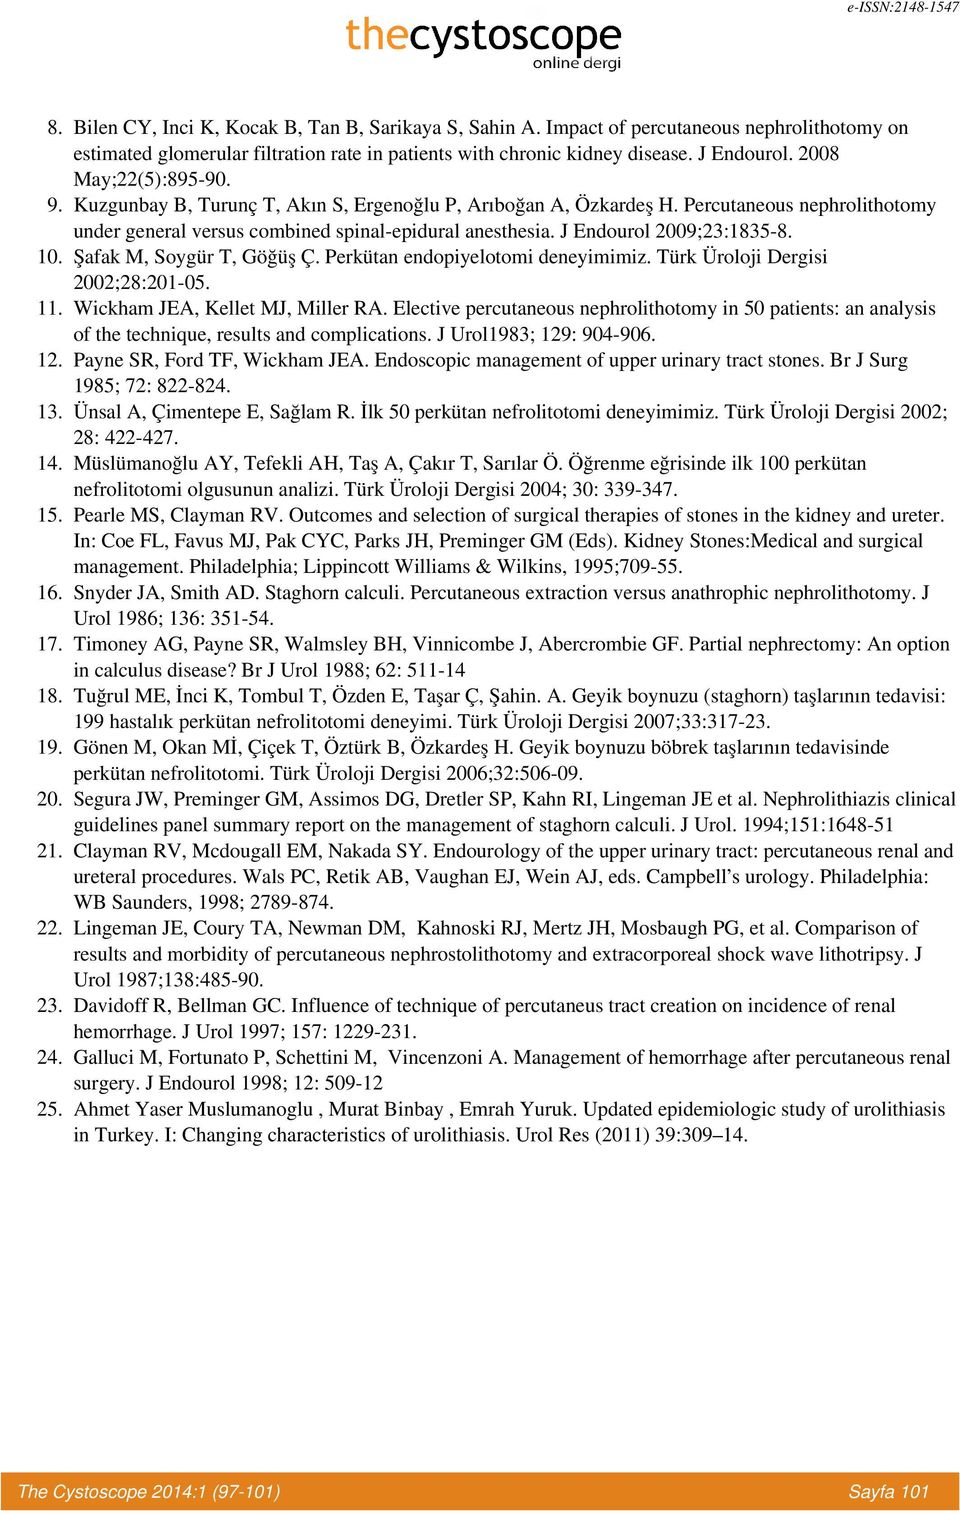 Kuzgunbay B, Turunç T, Akın S, Ergenoğlu P, Arıboğan A, Özkardeş H. Percutaneous nephrolithotomy under general versus combined spinal-epidural anesthesia. J Endourol 2009;23:1835-8. 10.